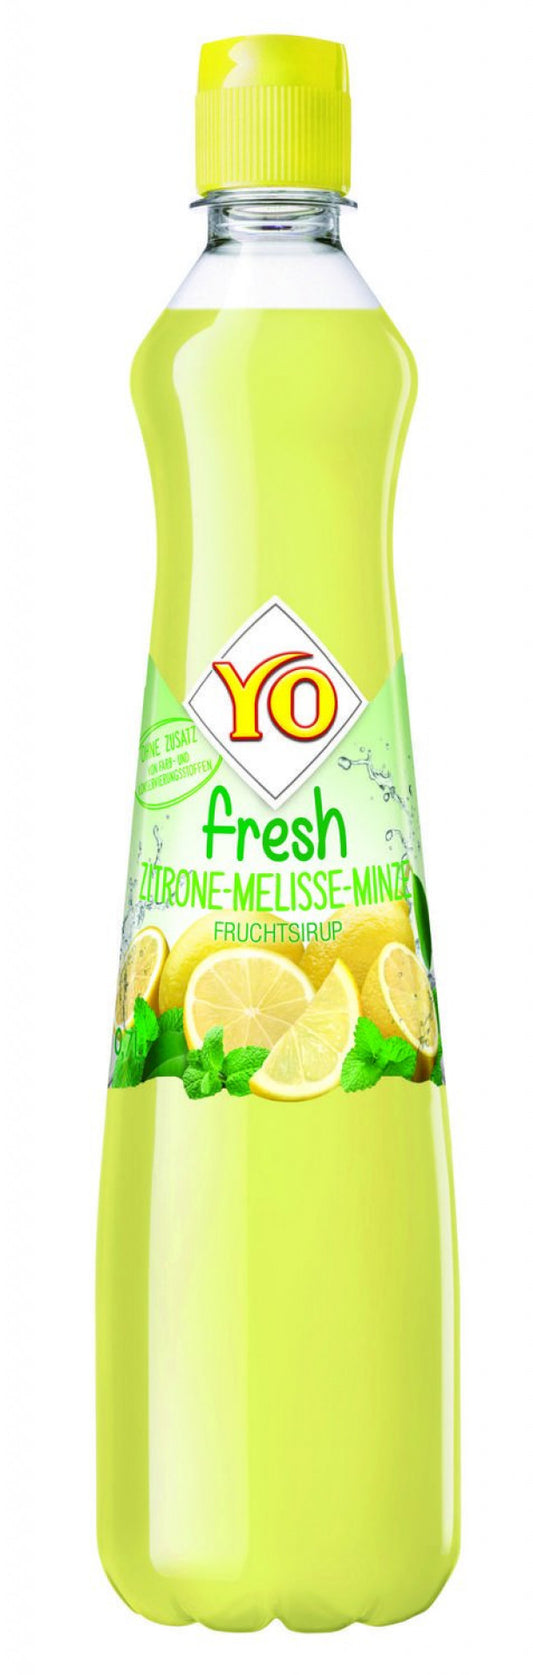 YO fresh Sirup Zitrone-Melisse-Minze